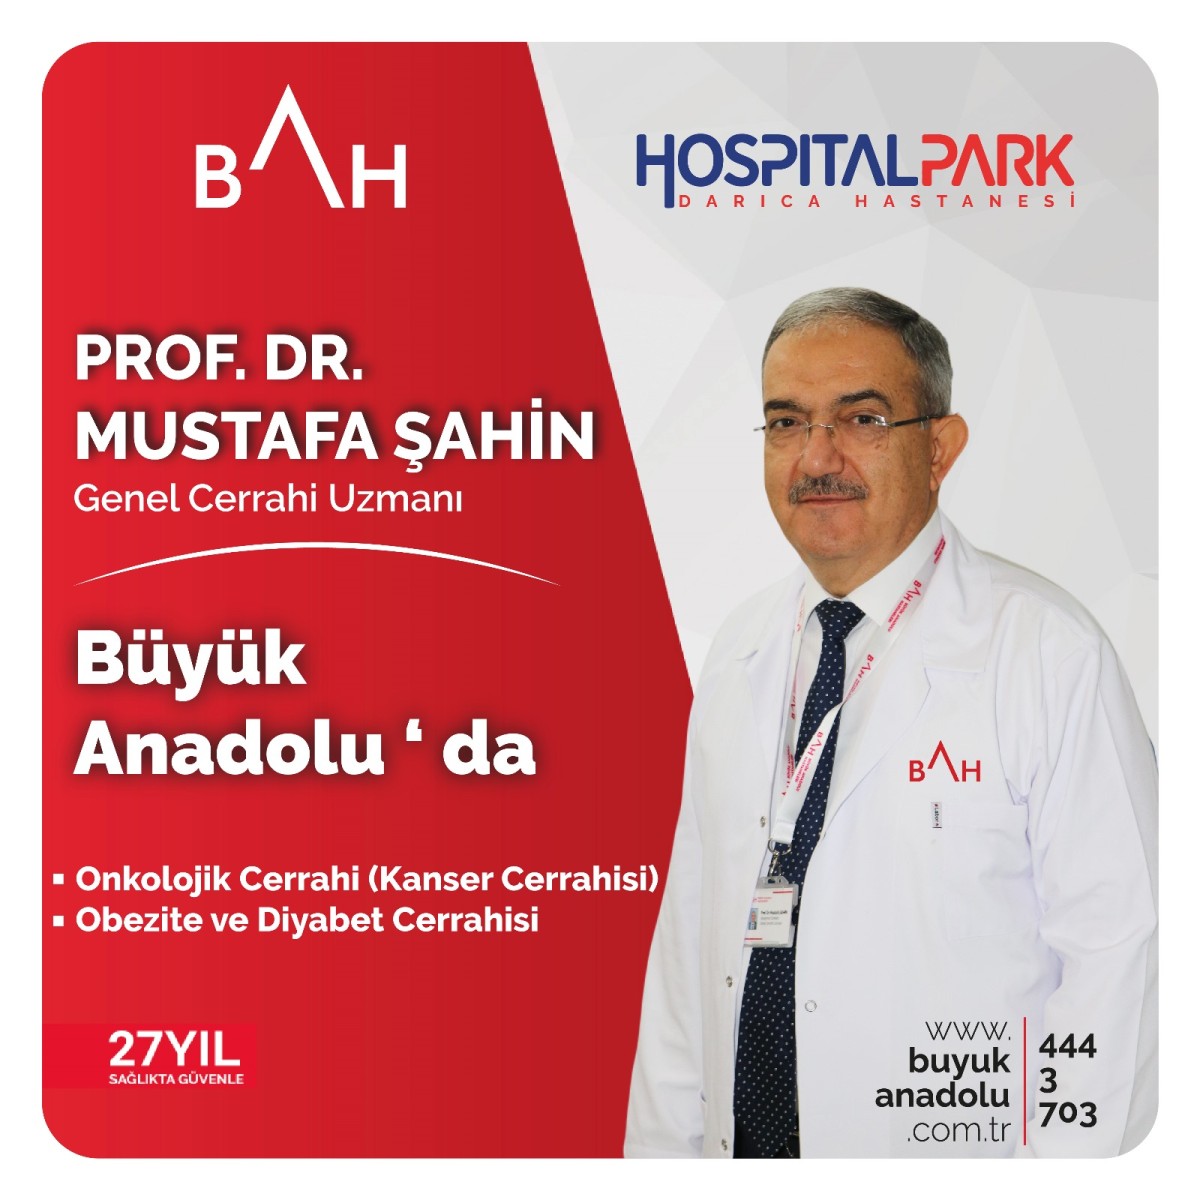 Prof.Dr. Mustafa Şahin Hospitalpark Hastanesi’nde 